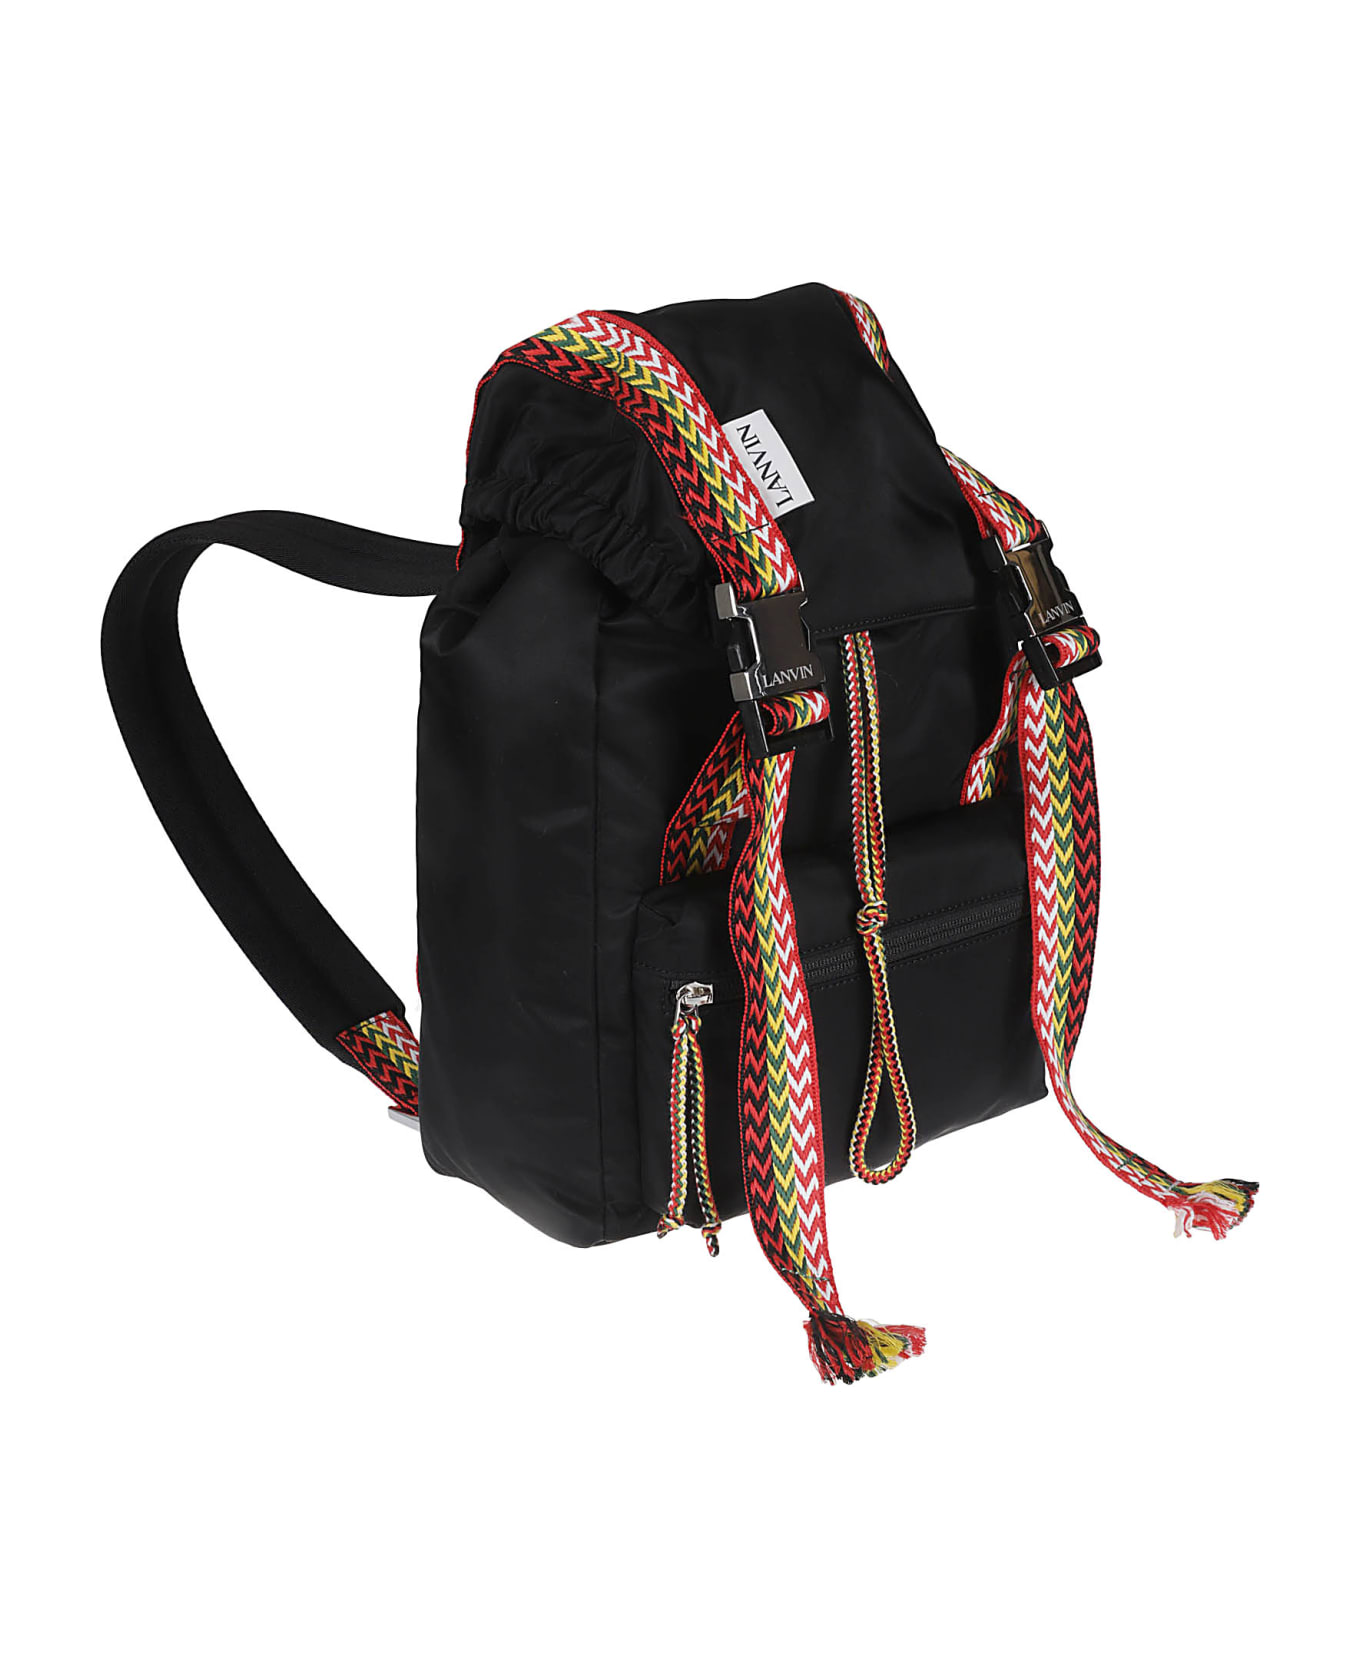 Lanvin Nano Curb Backpack - Nero